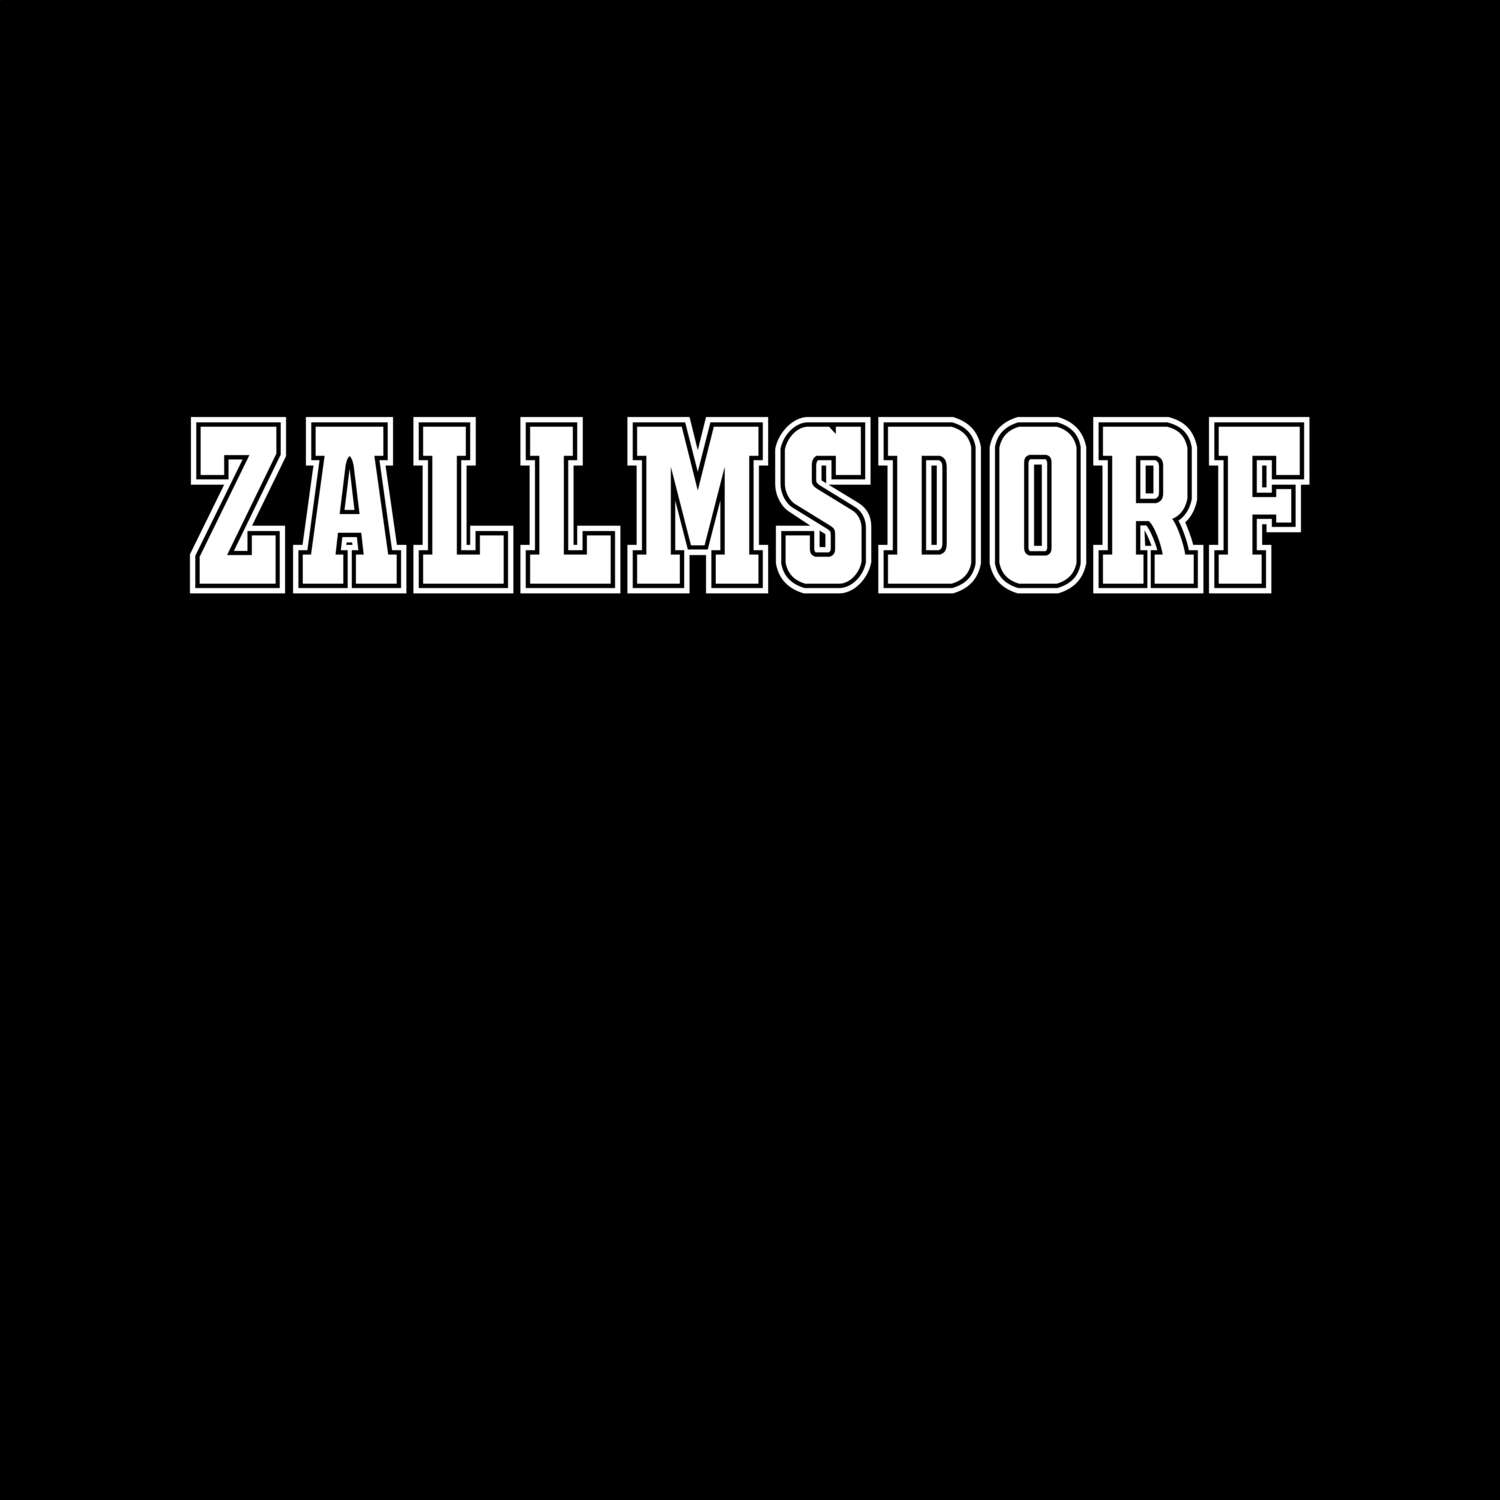 Zallmsdorf T-Shirt »Classic«